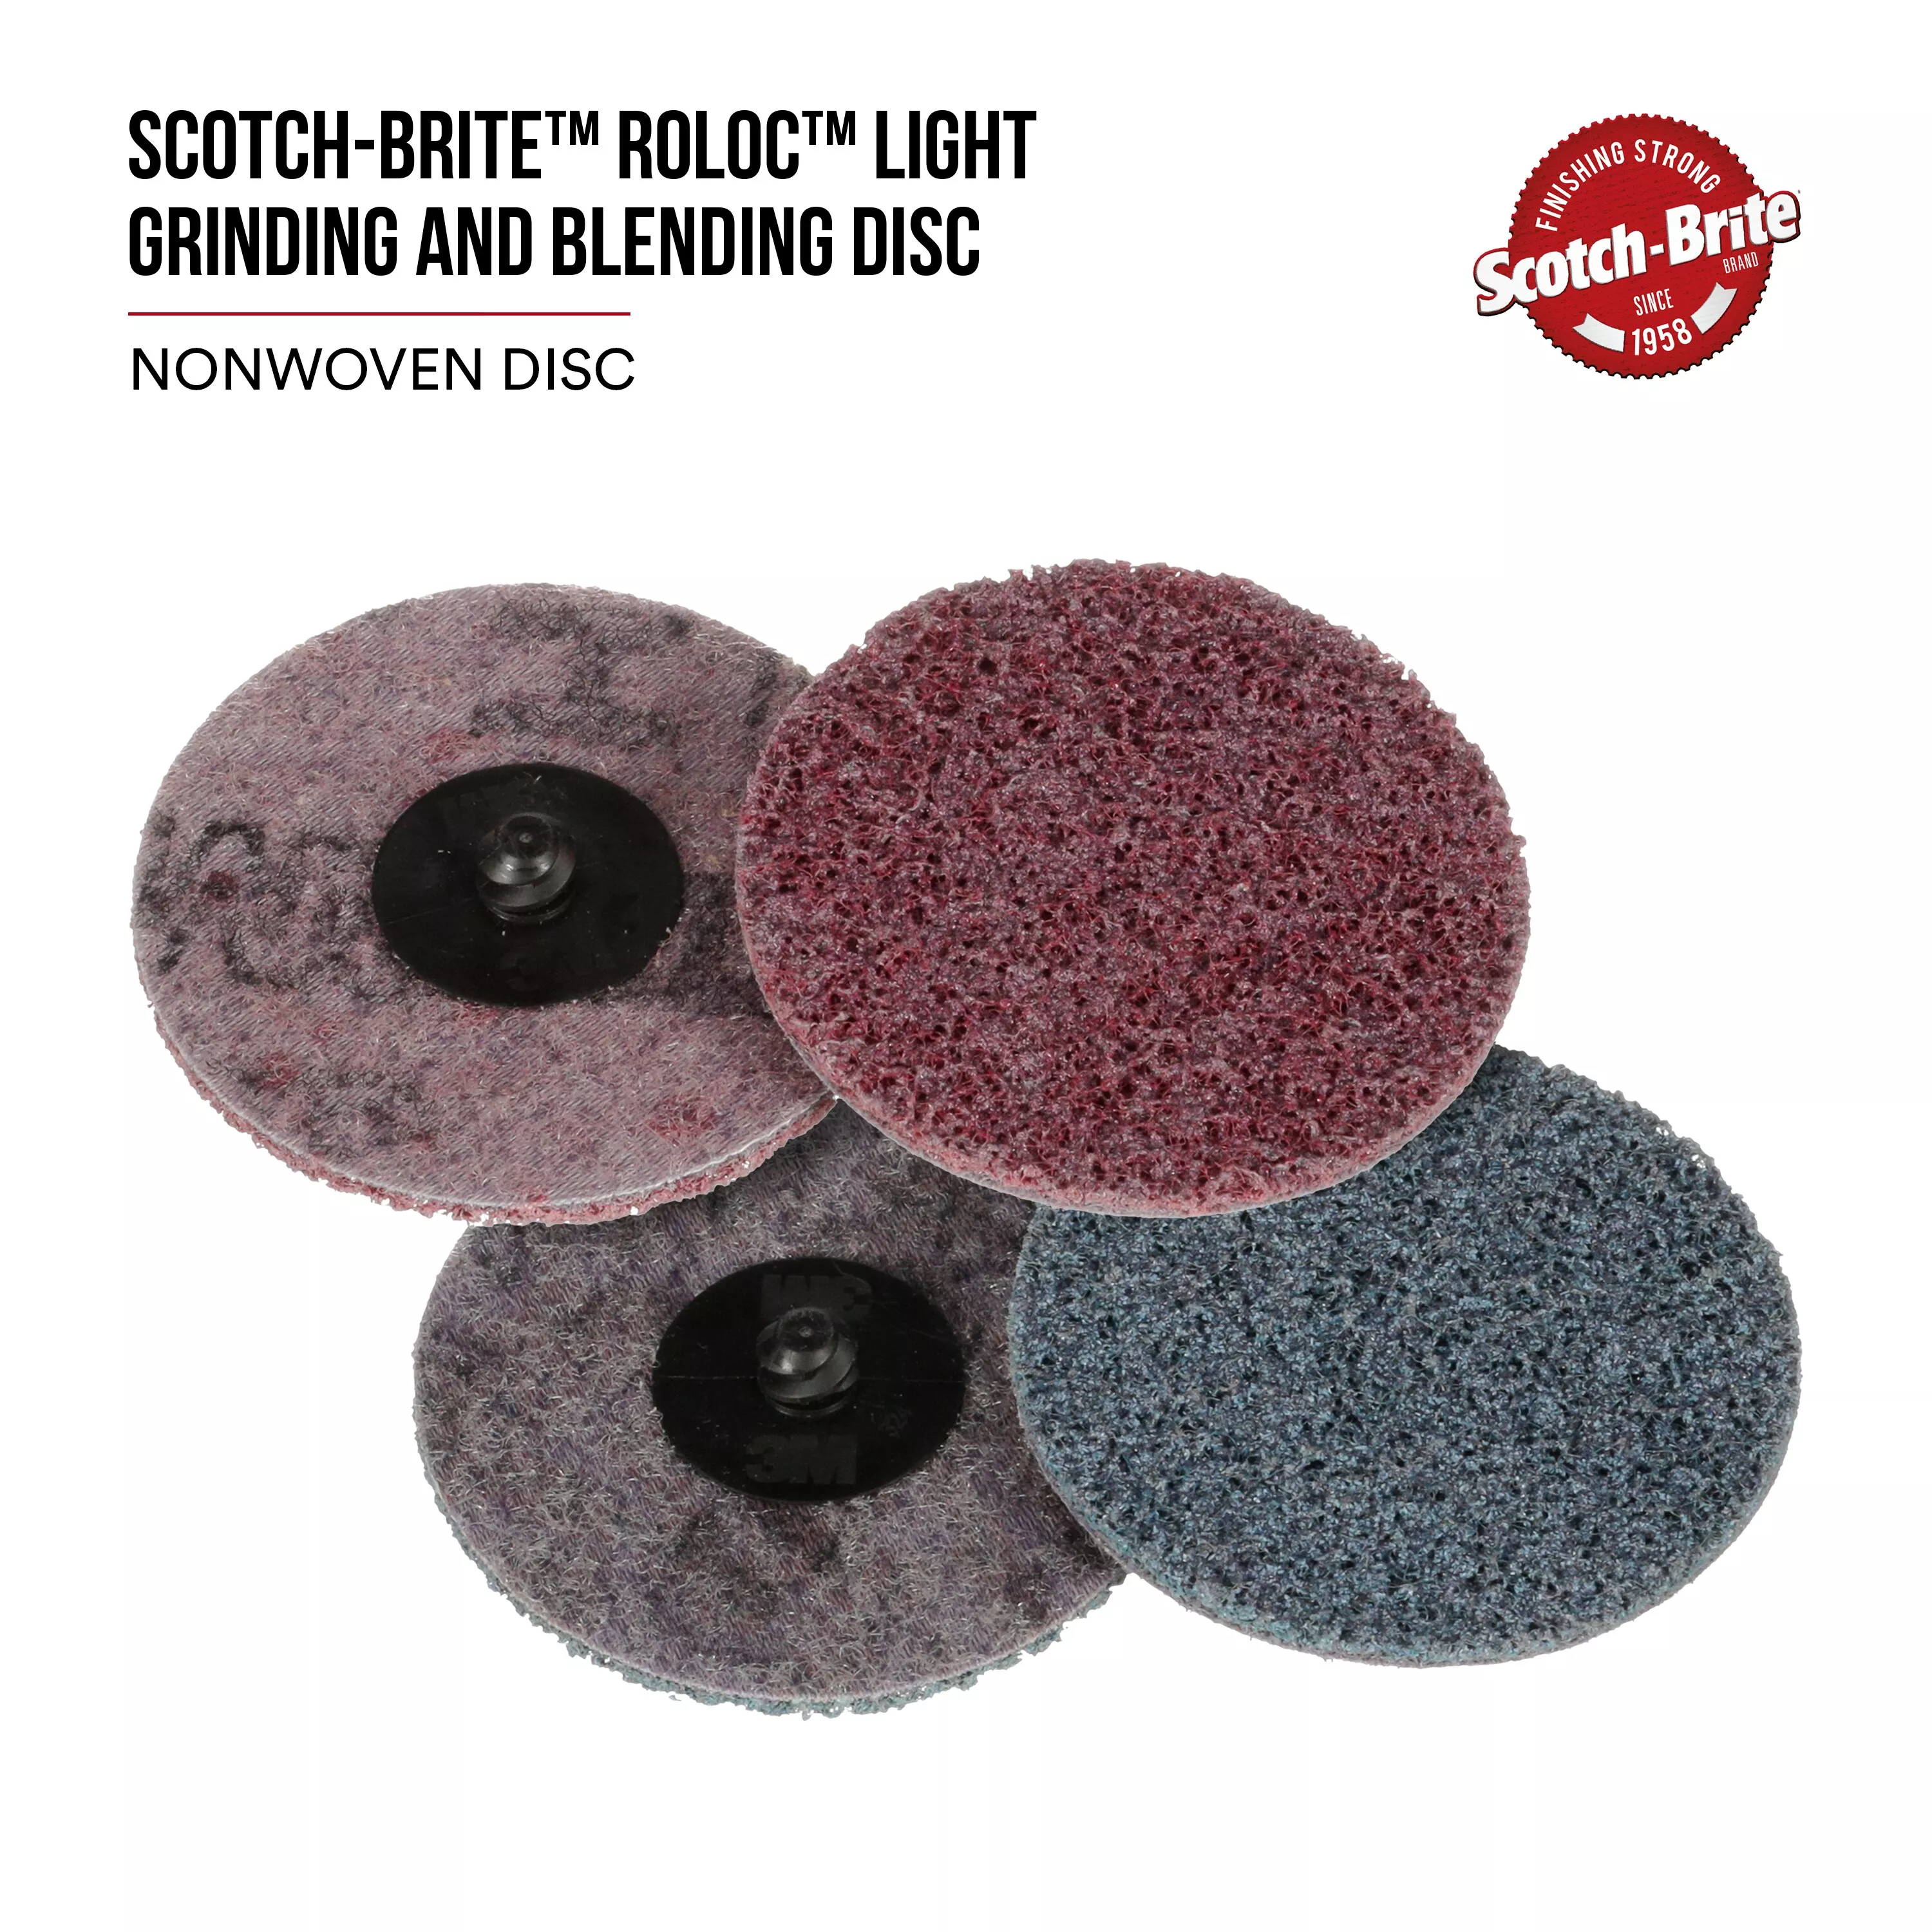 SKU 7000000780 | Scotch-Brite™ Roloc™ Light Grinding and Blending Disc